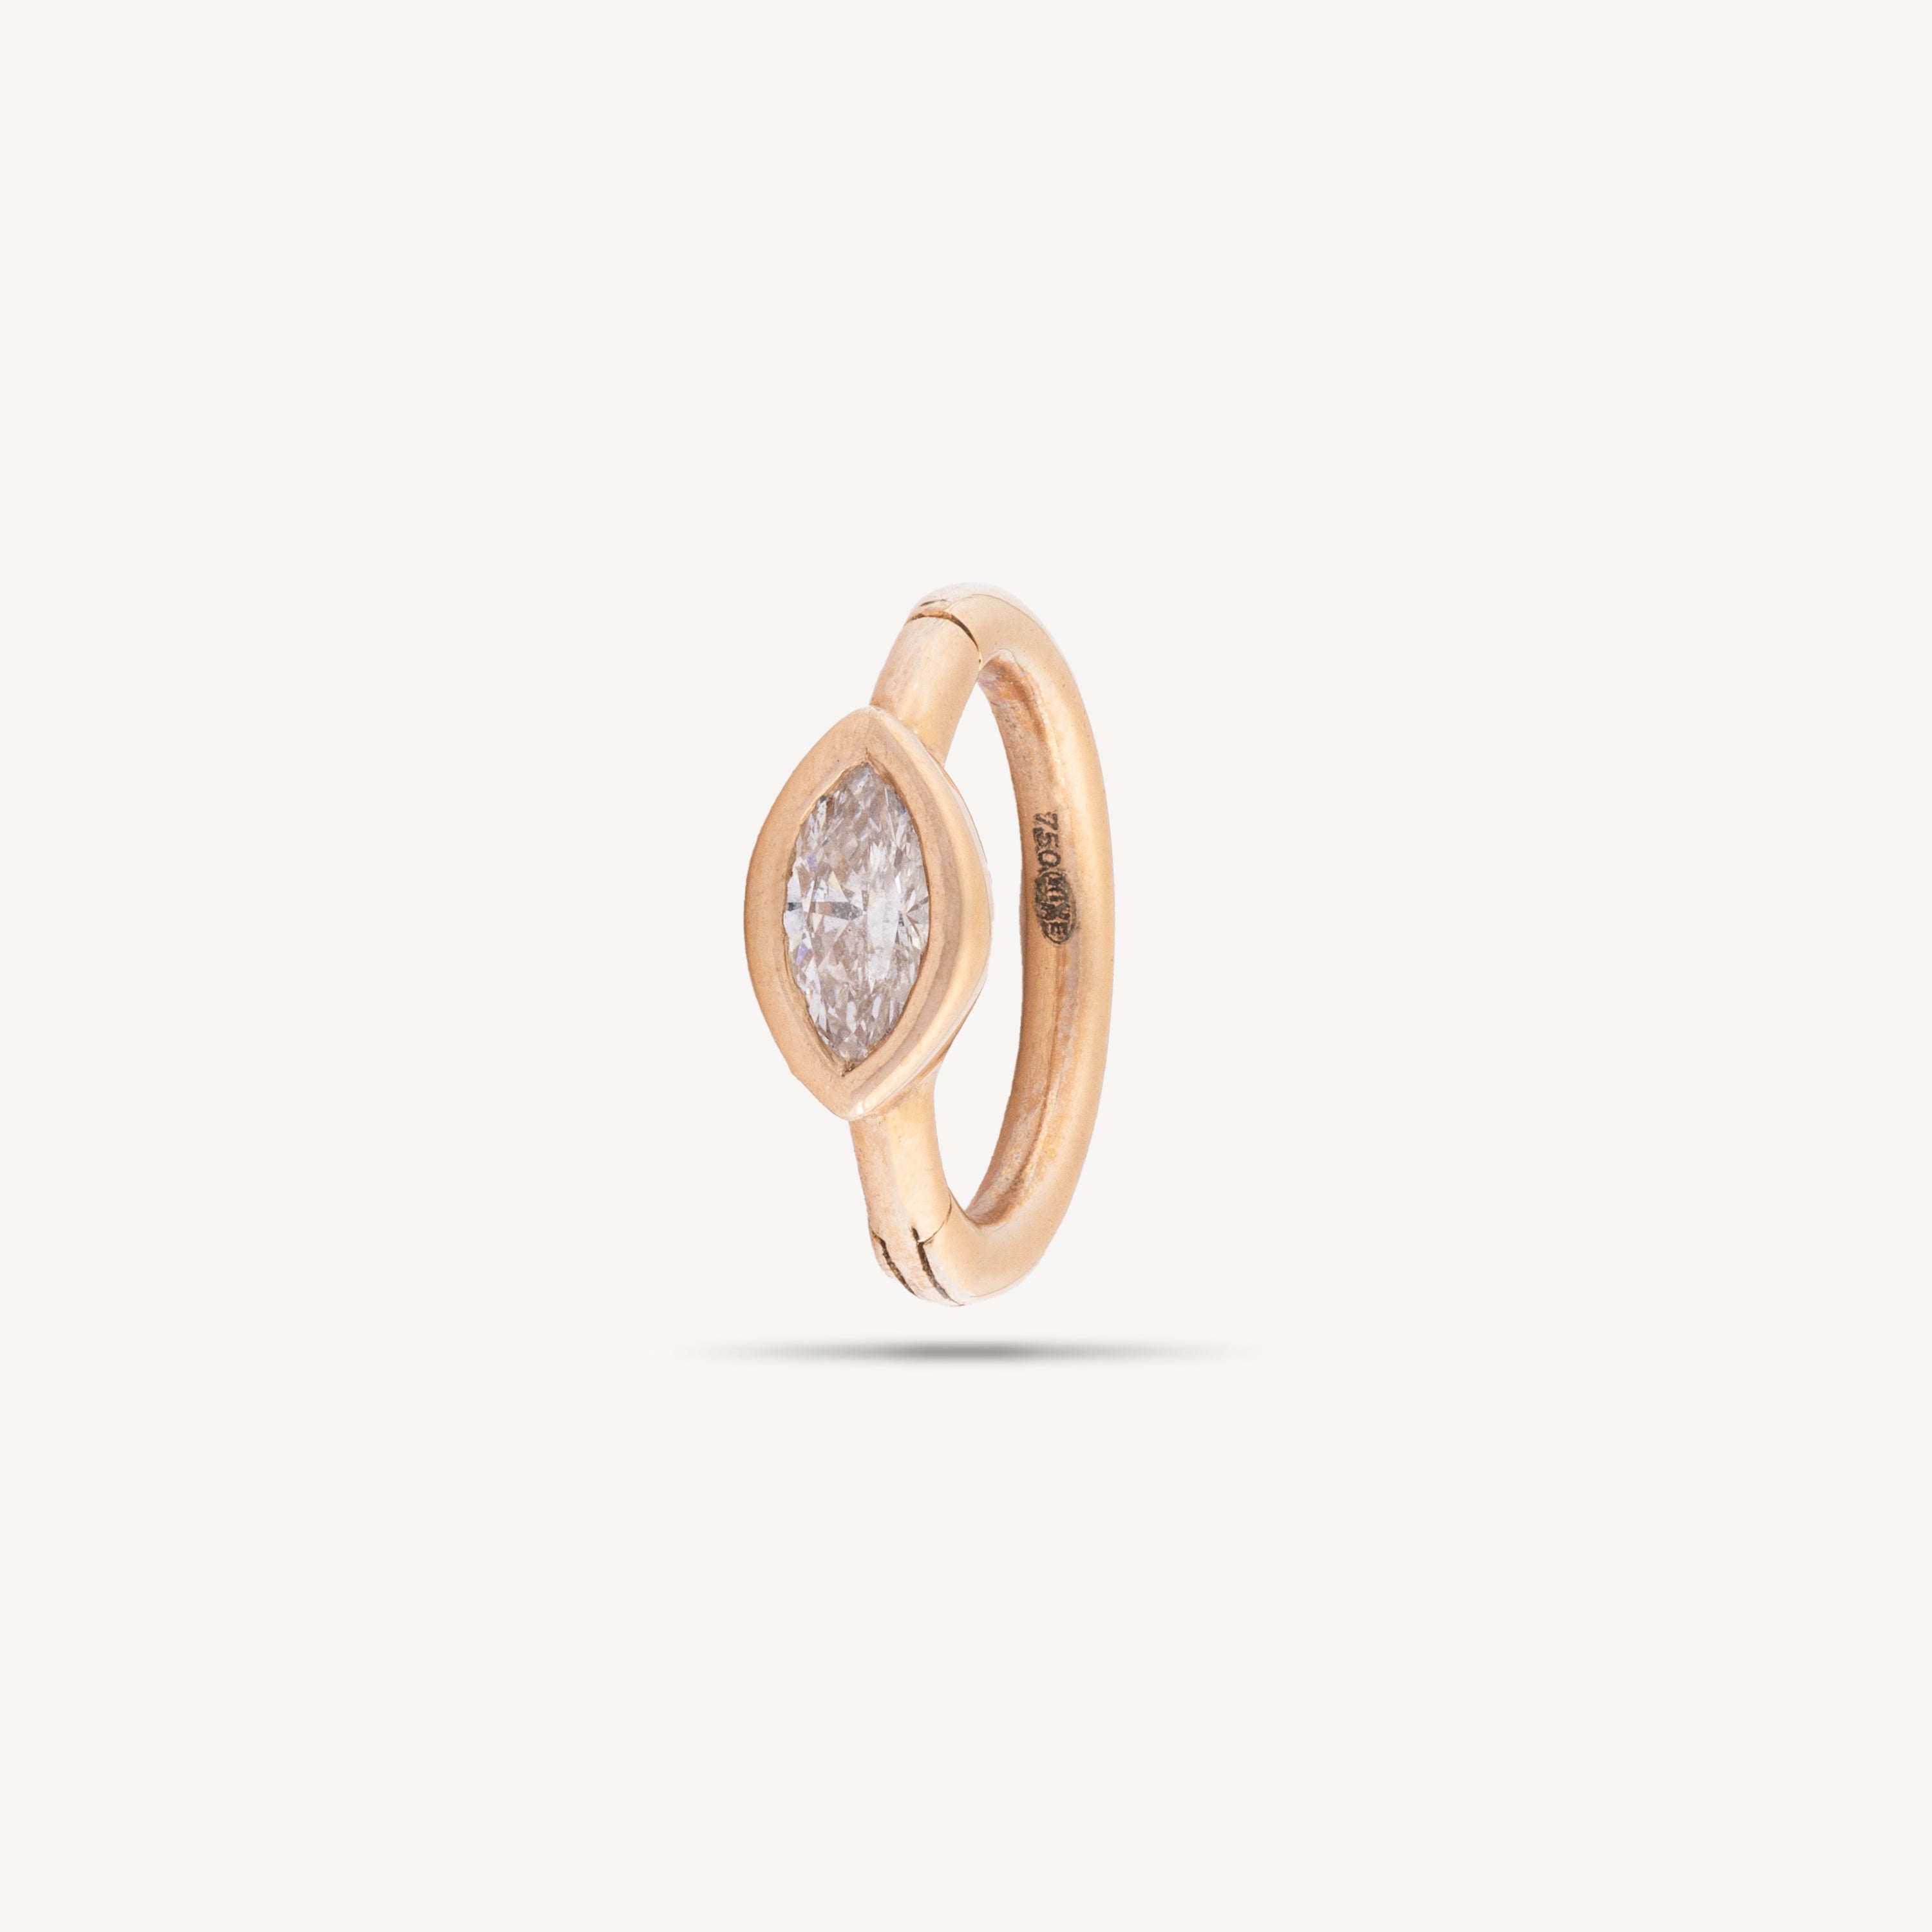 Rose gold 3x2mm marquise diamond 6.5mm hoop